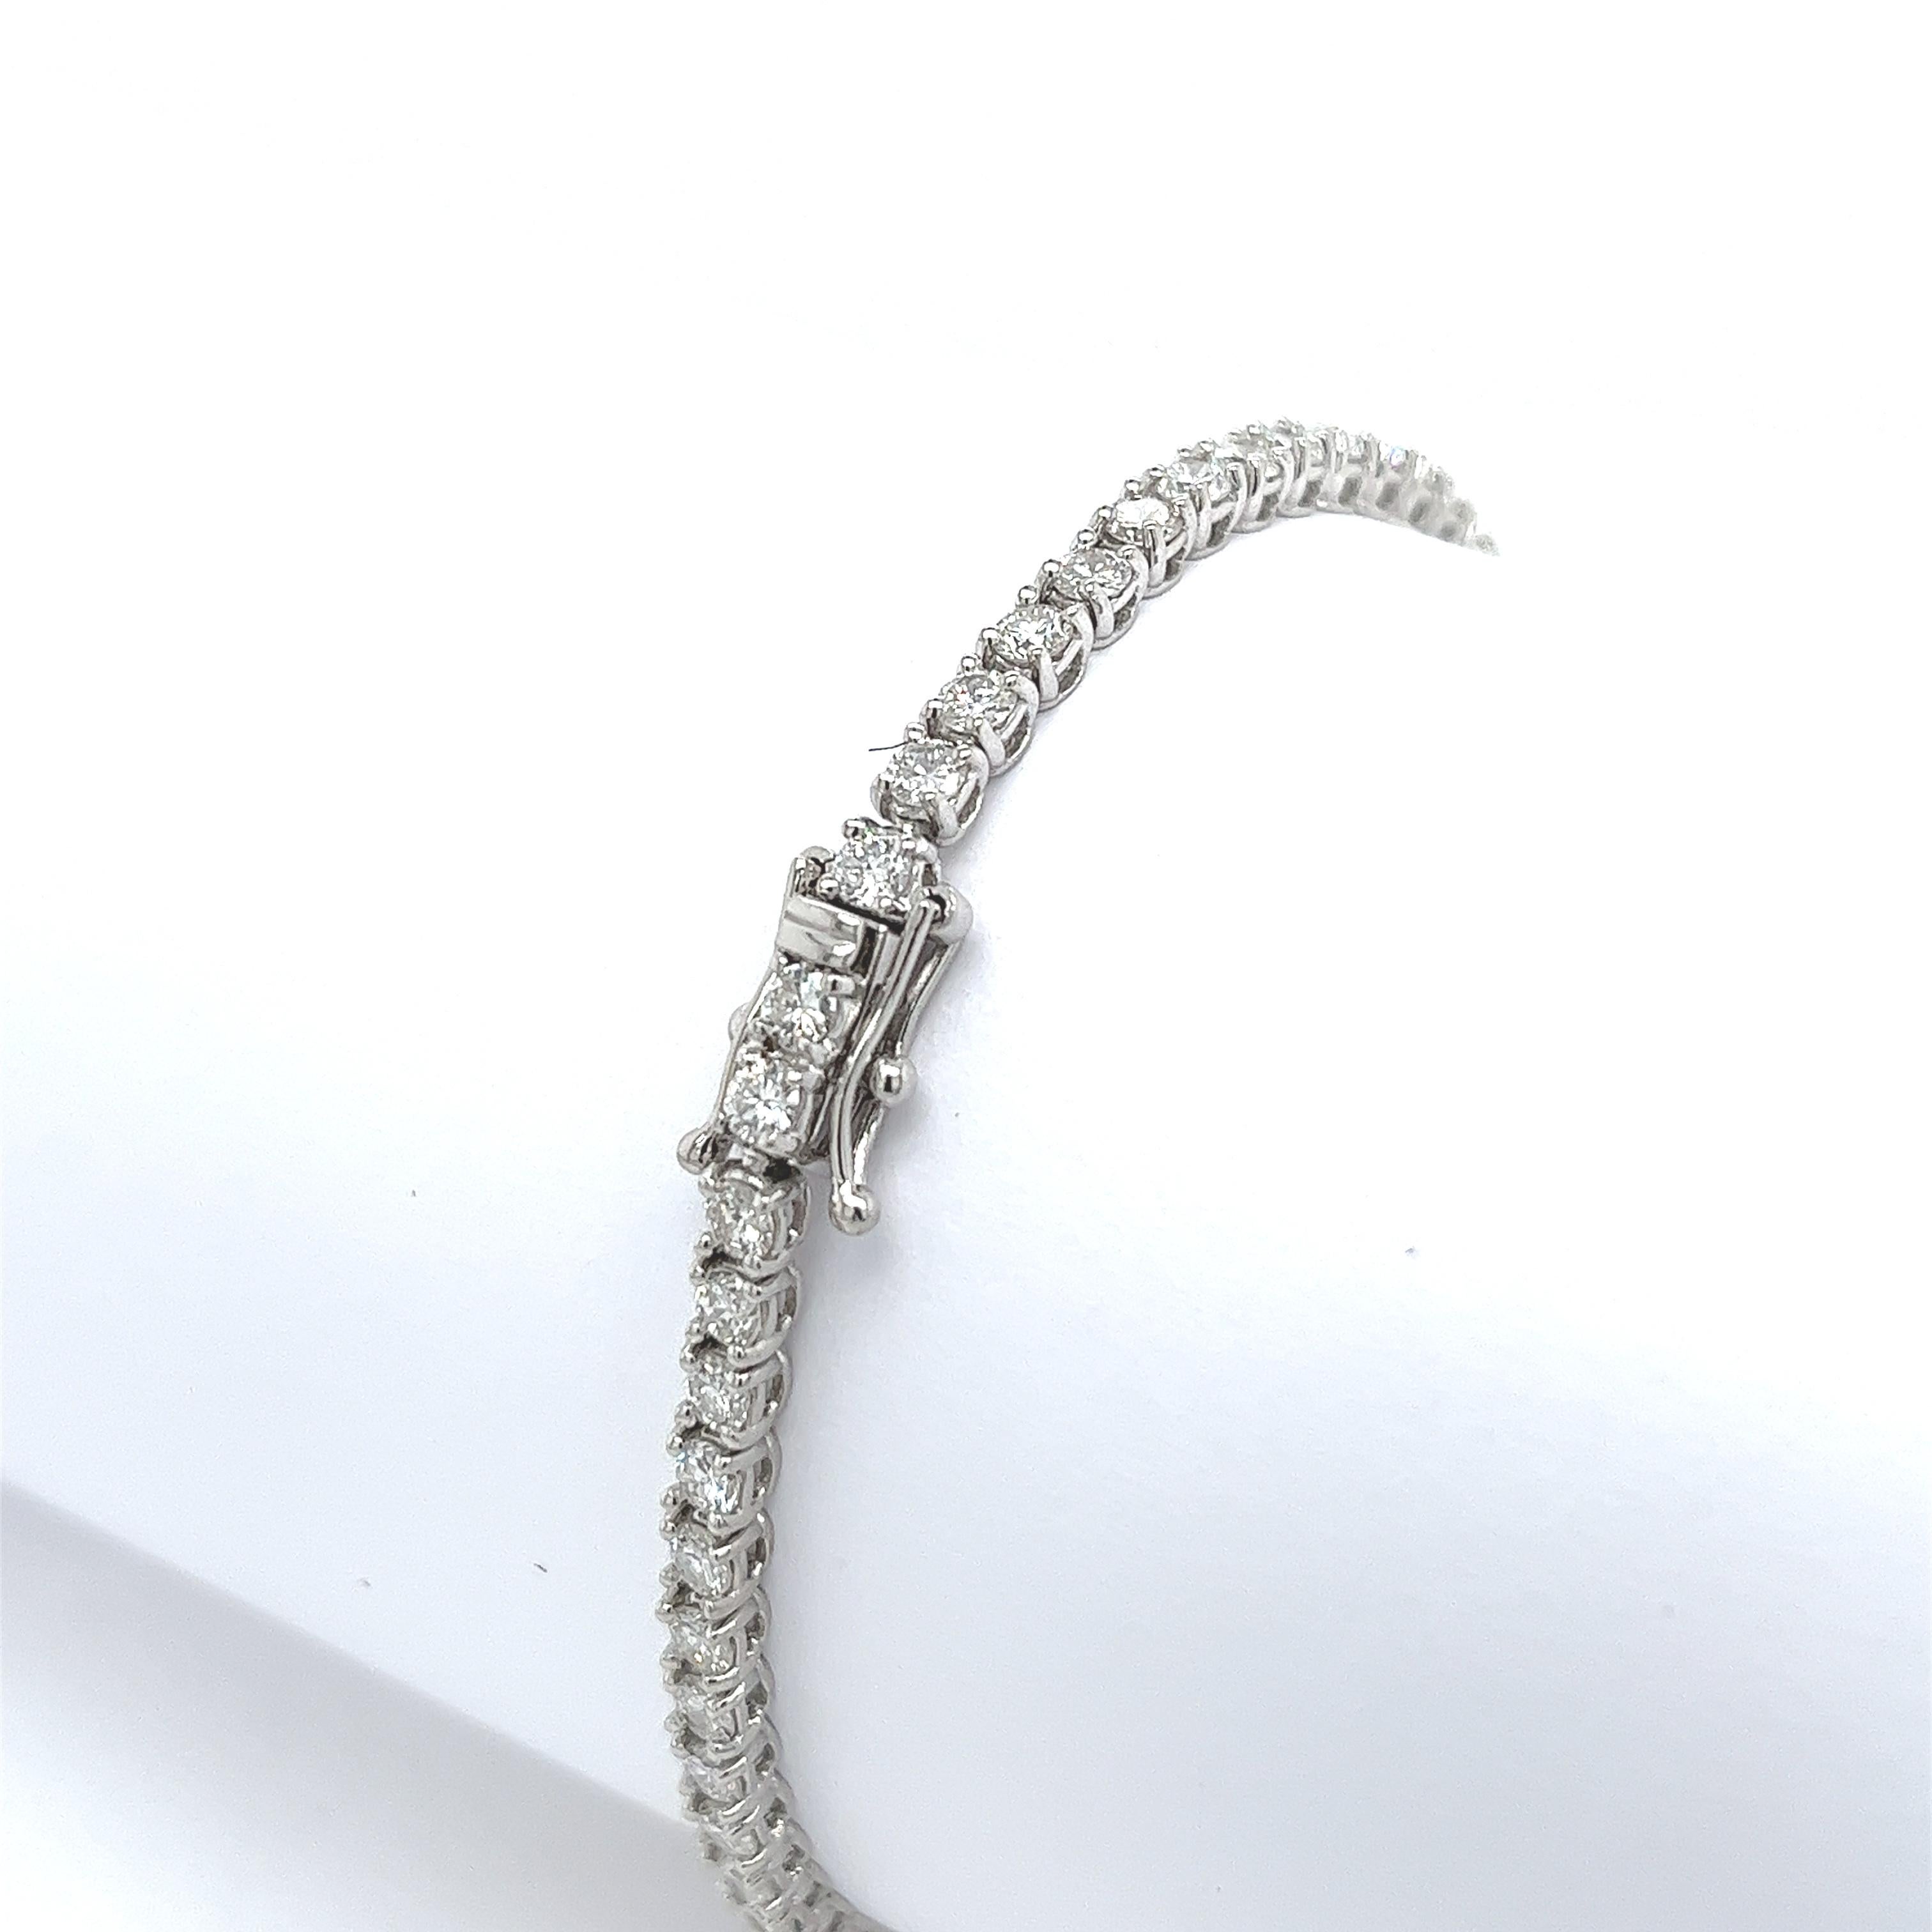 1.60ct 18ct white gold tennis bracelet guaranteed g/h colour si purity natural diamonds